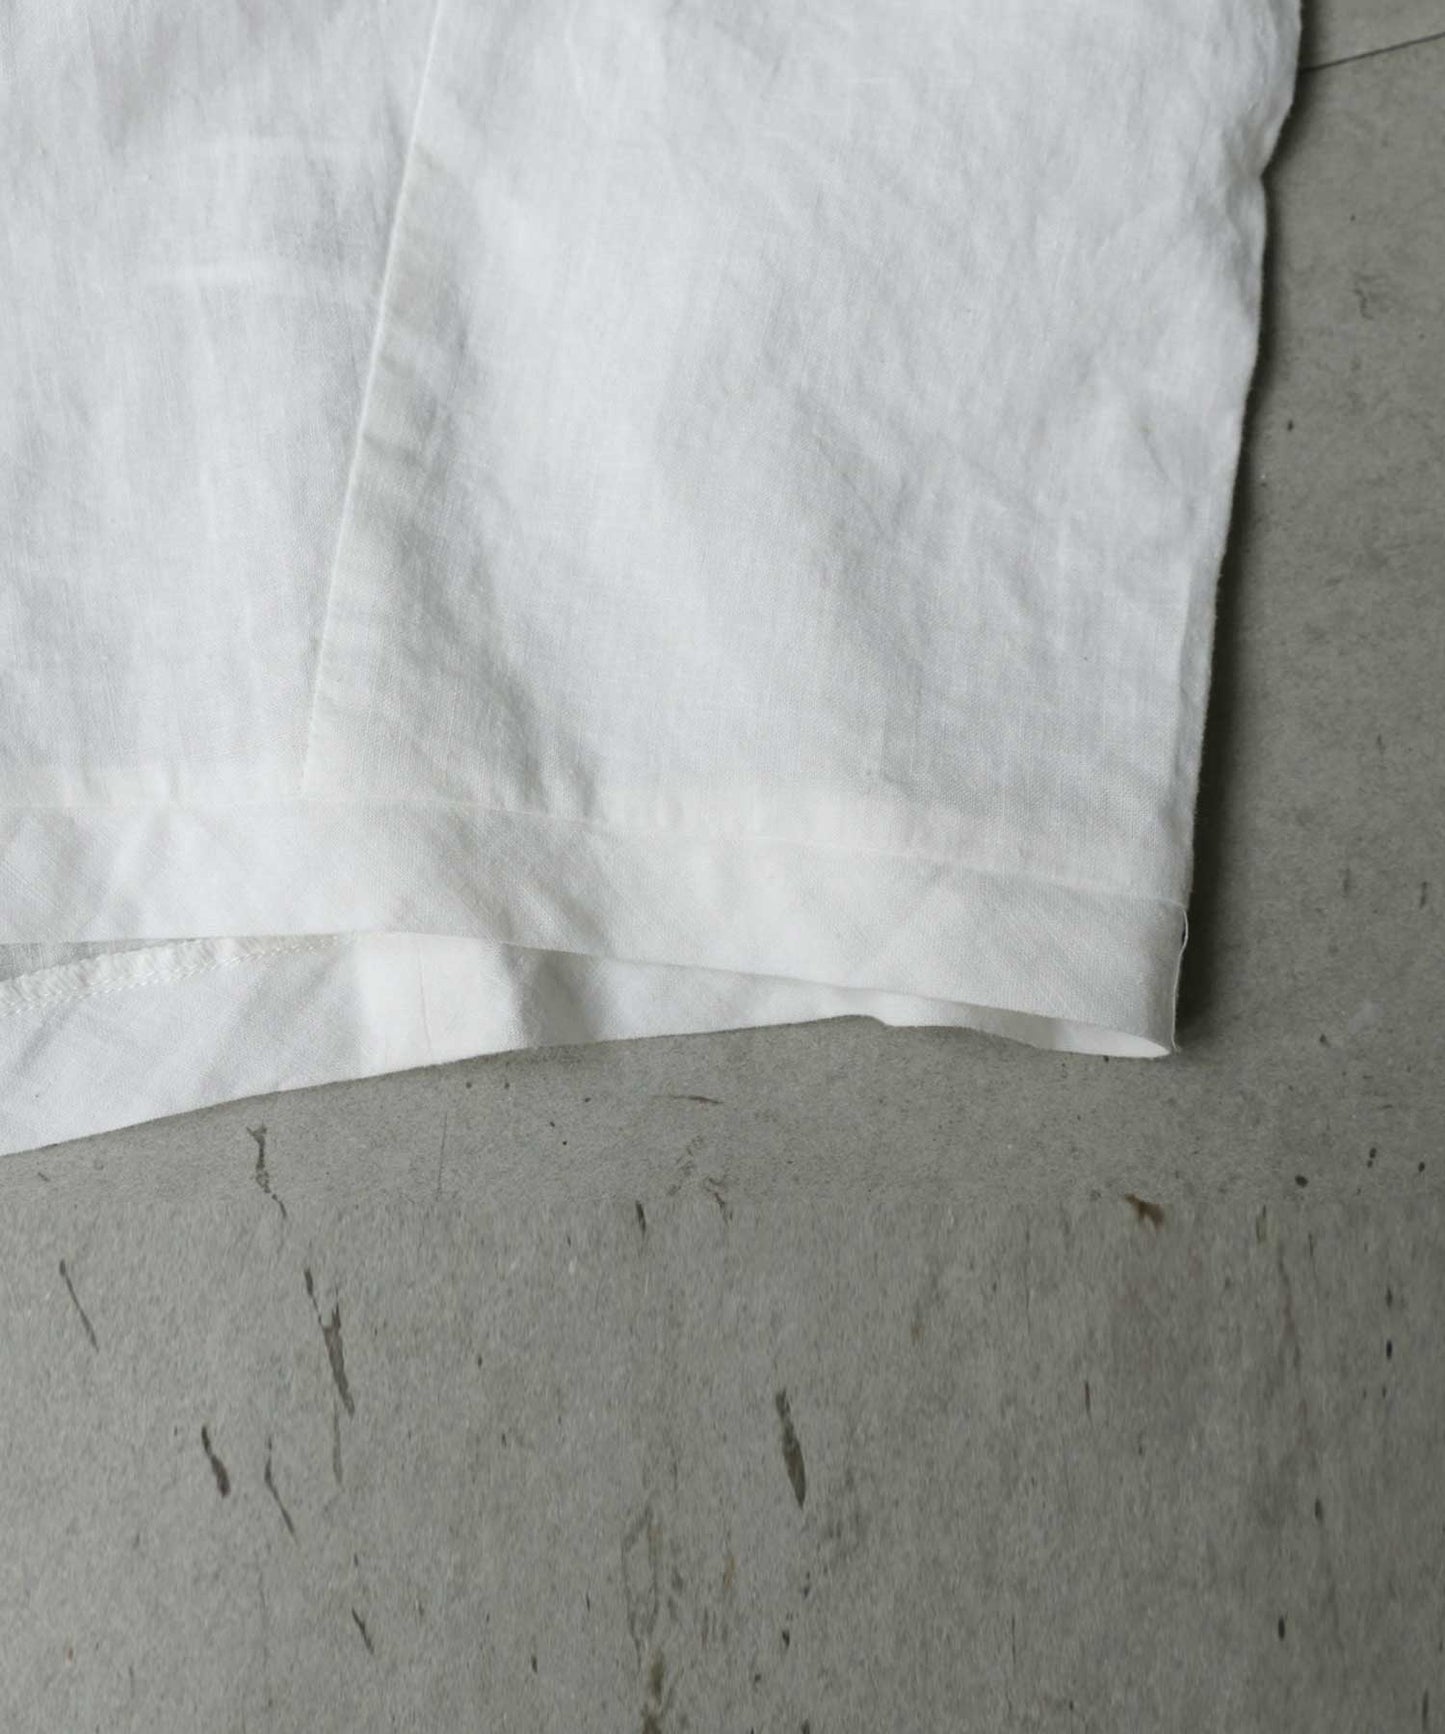 Cotton linen short-sleeve dolman tops Ladies tops Plain